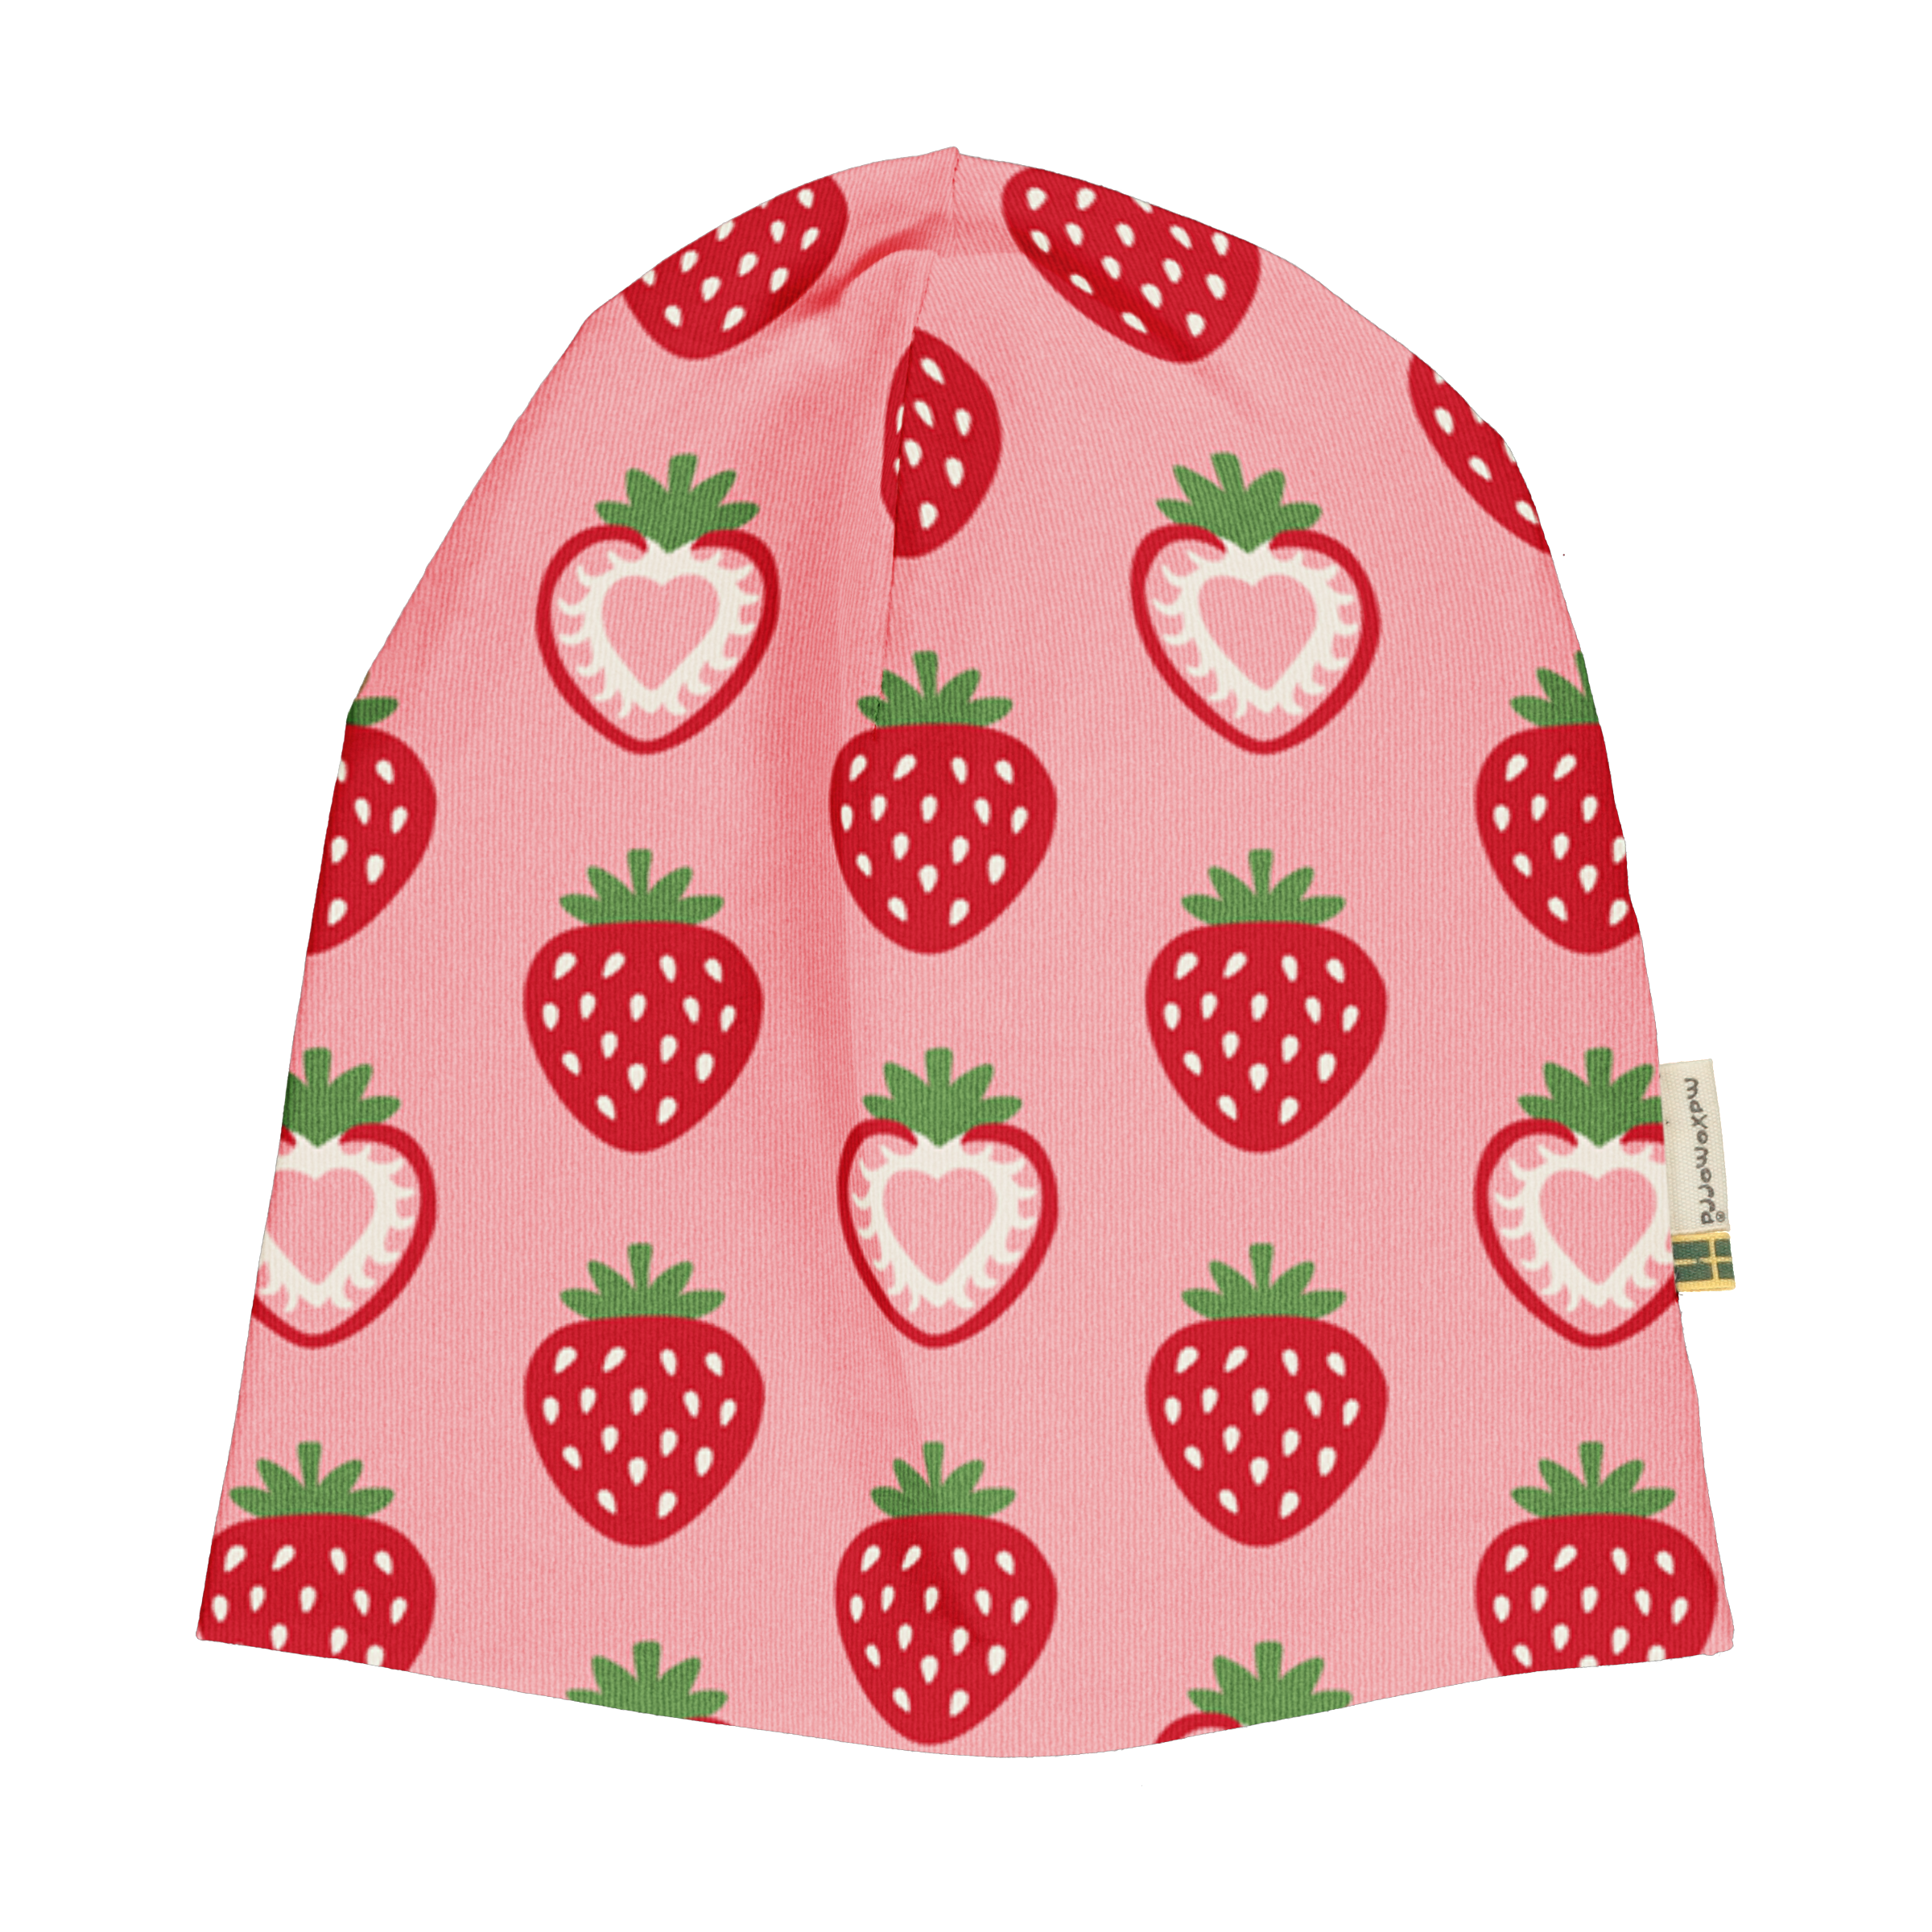 Maxomorra - Double Layered Hat - Strawberry